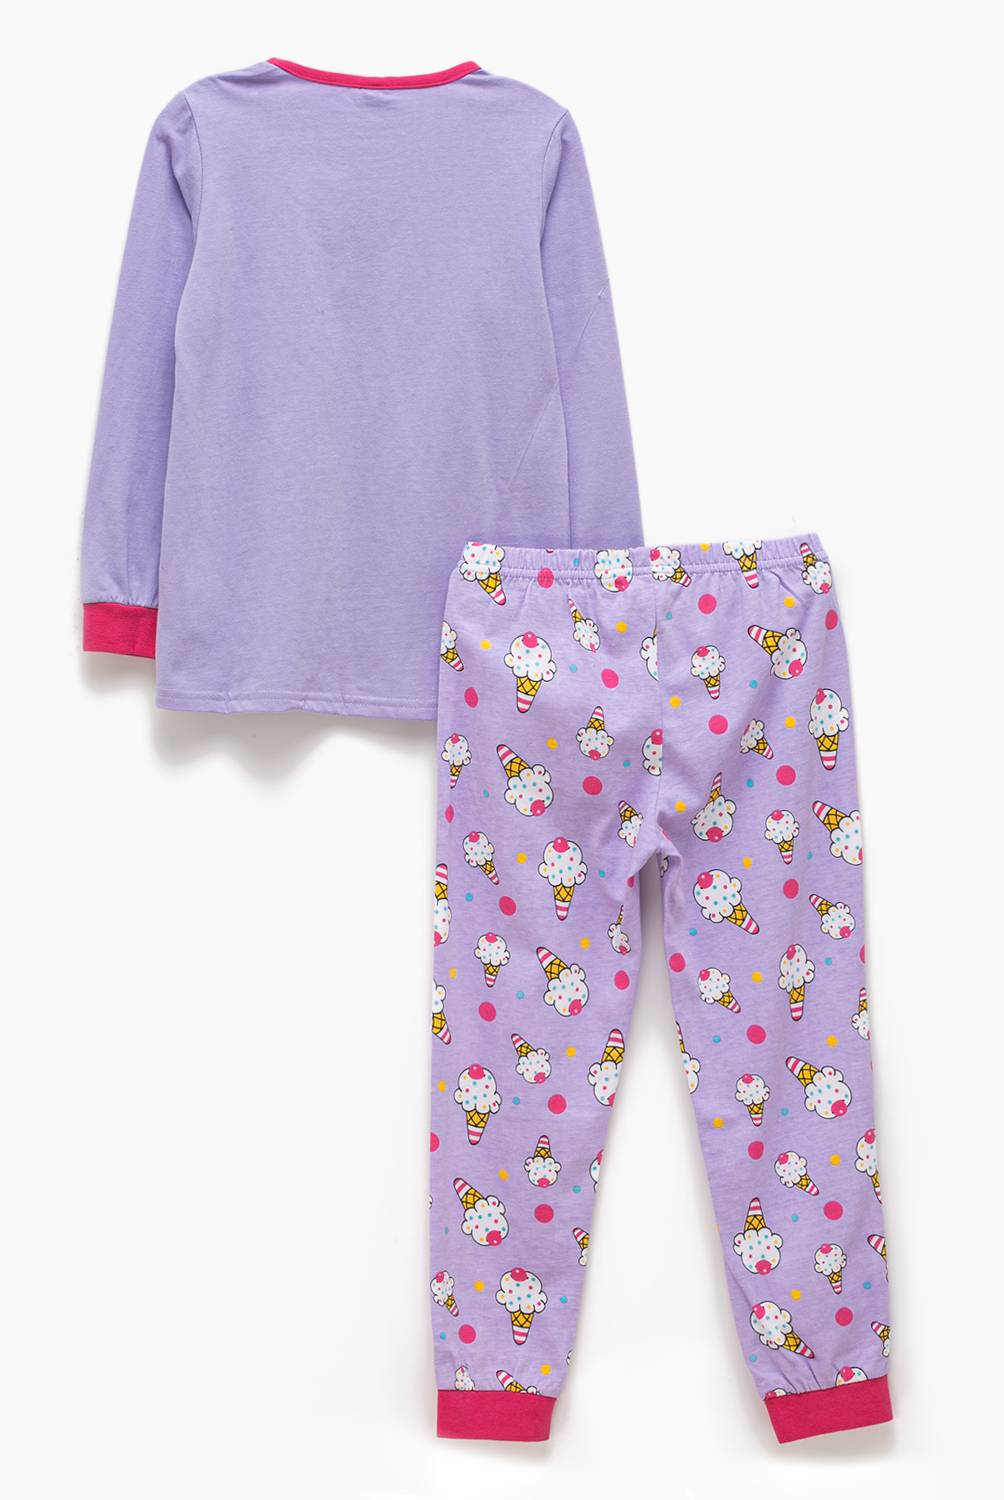 Yamp - Pijama Niña de Algodón